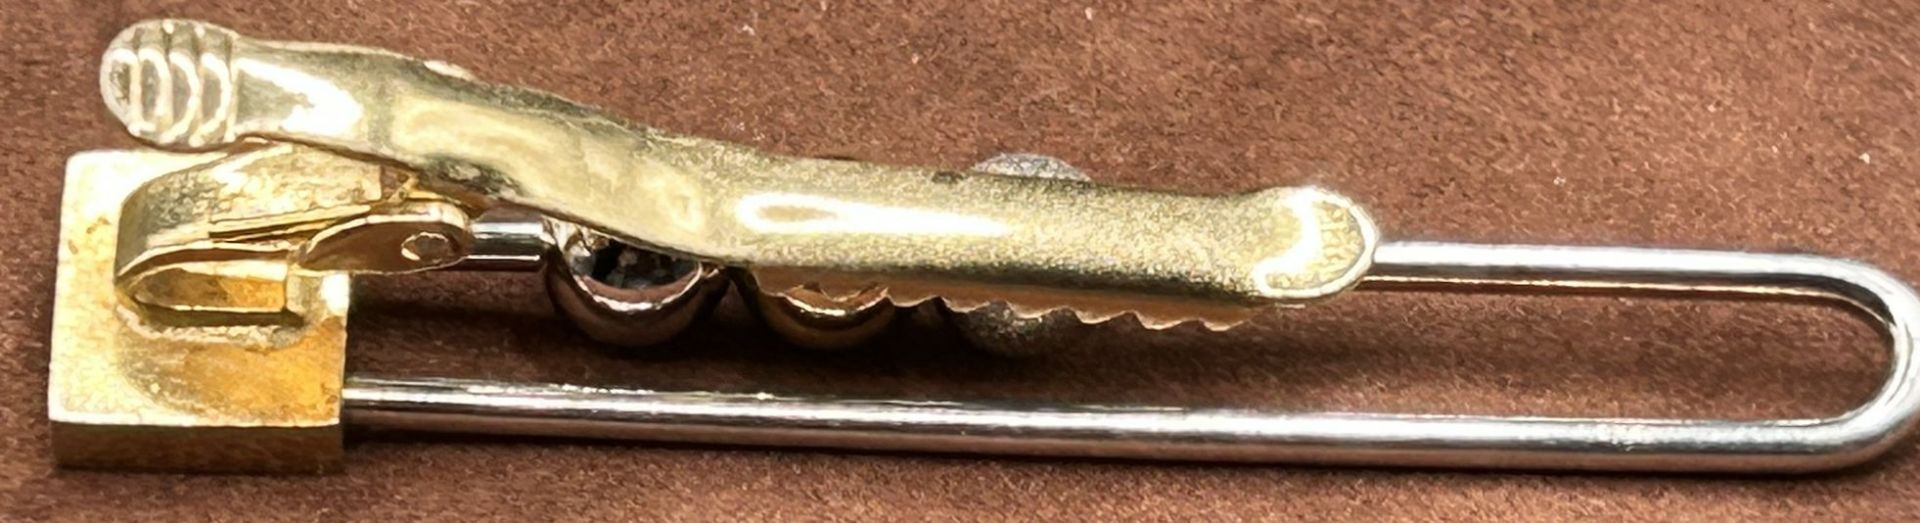 Krawattenklammer, Silber-925- mit 3 beweglichen Kugel, Klamme Metall, L-6,2 cm, 10,2 gr - Image 4 of 4